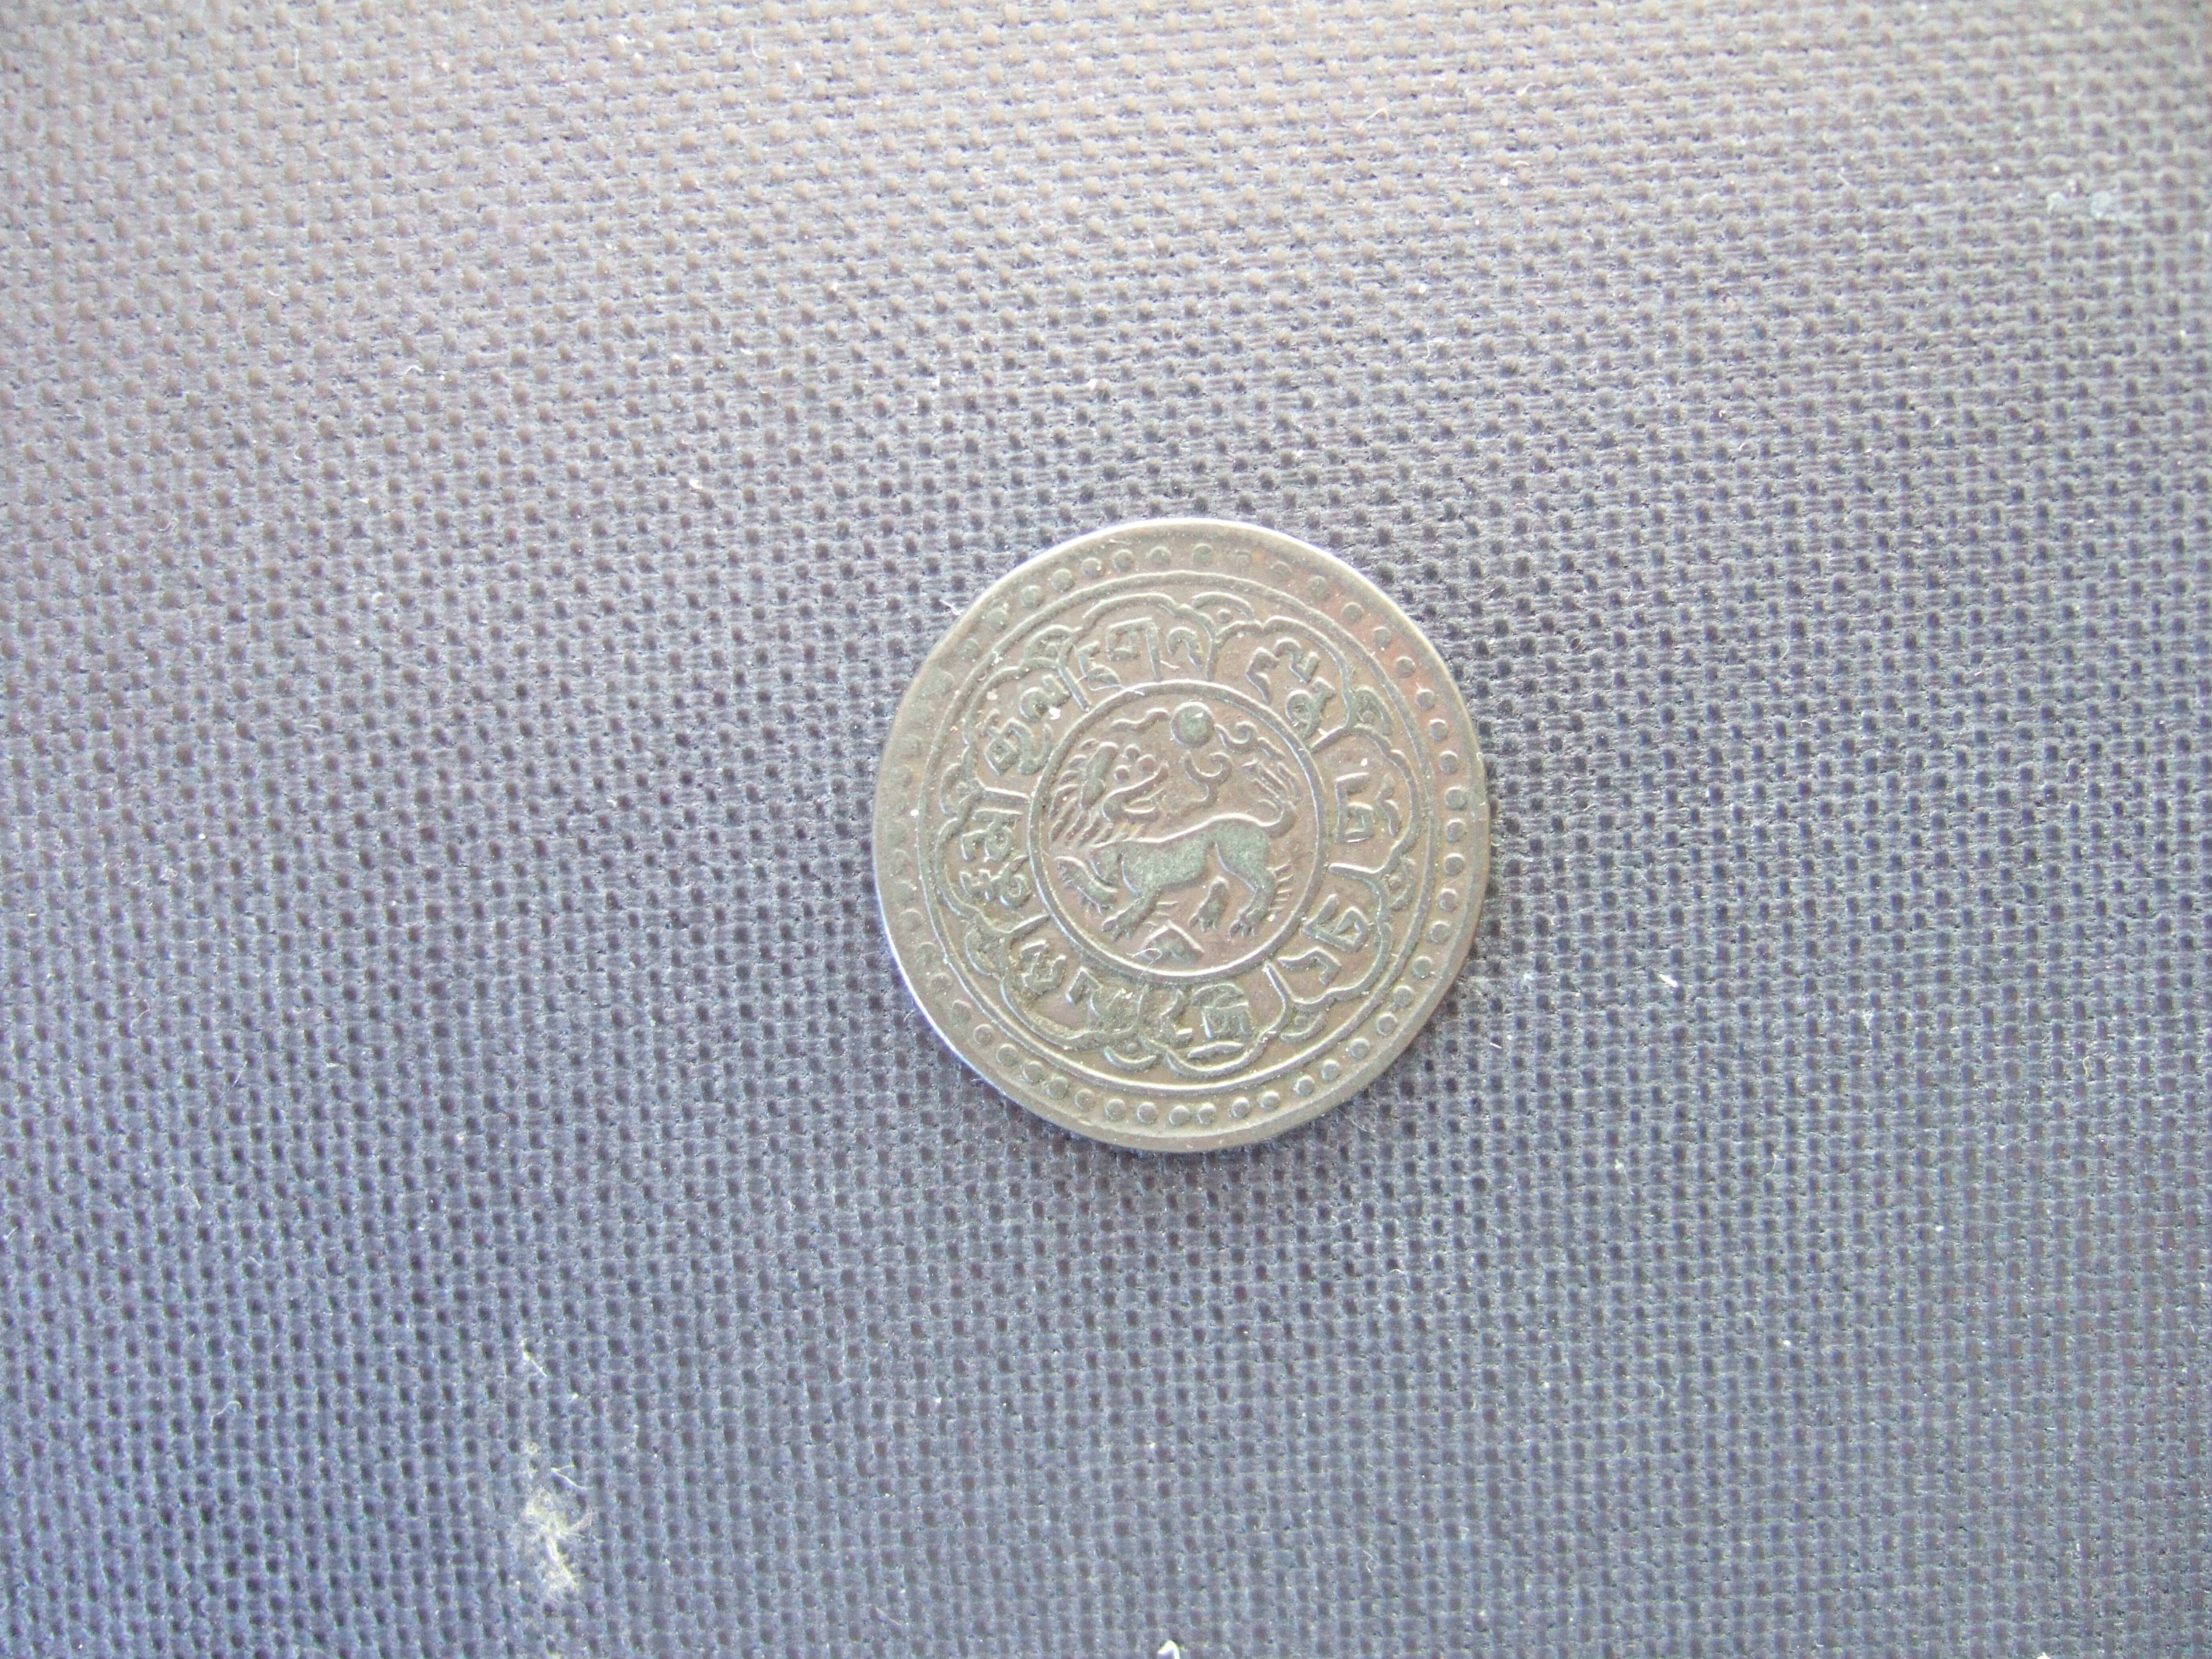 Cash (moneda china) - Wikipedia, la enciclopedia libre